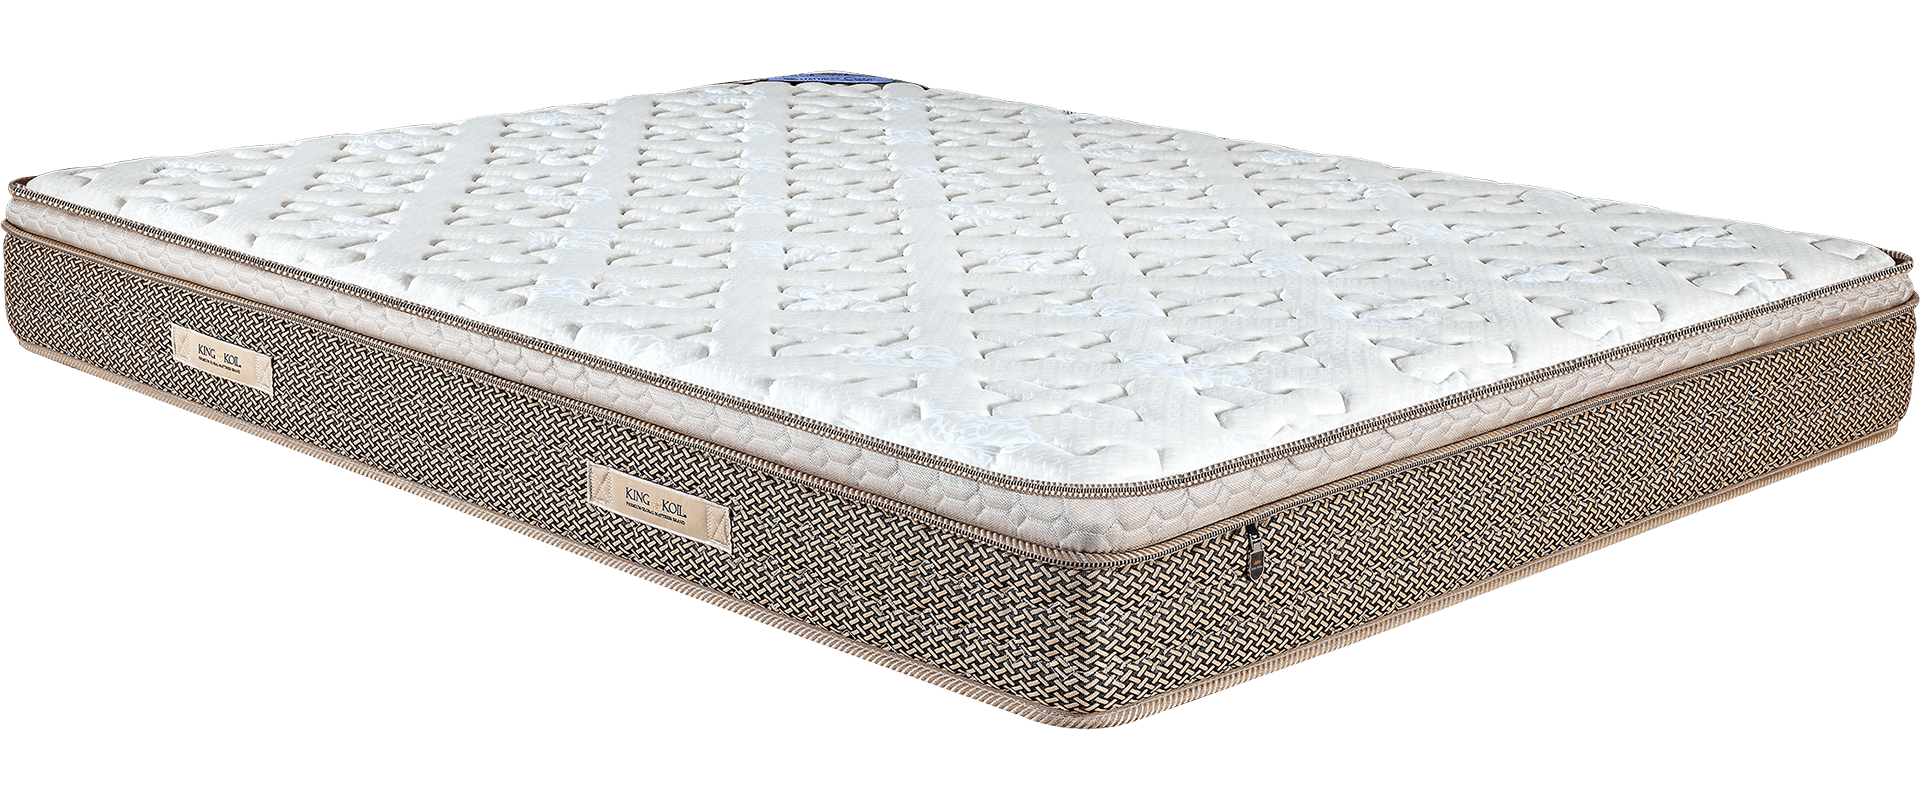 dr ortho mattress 6 inch